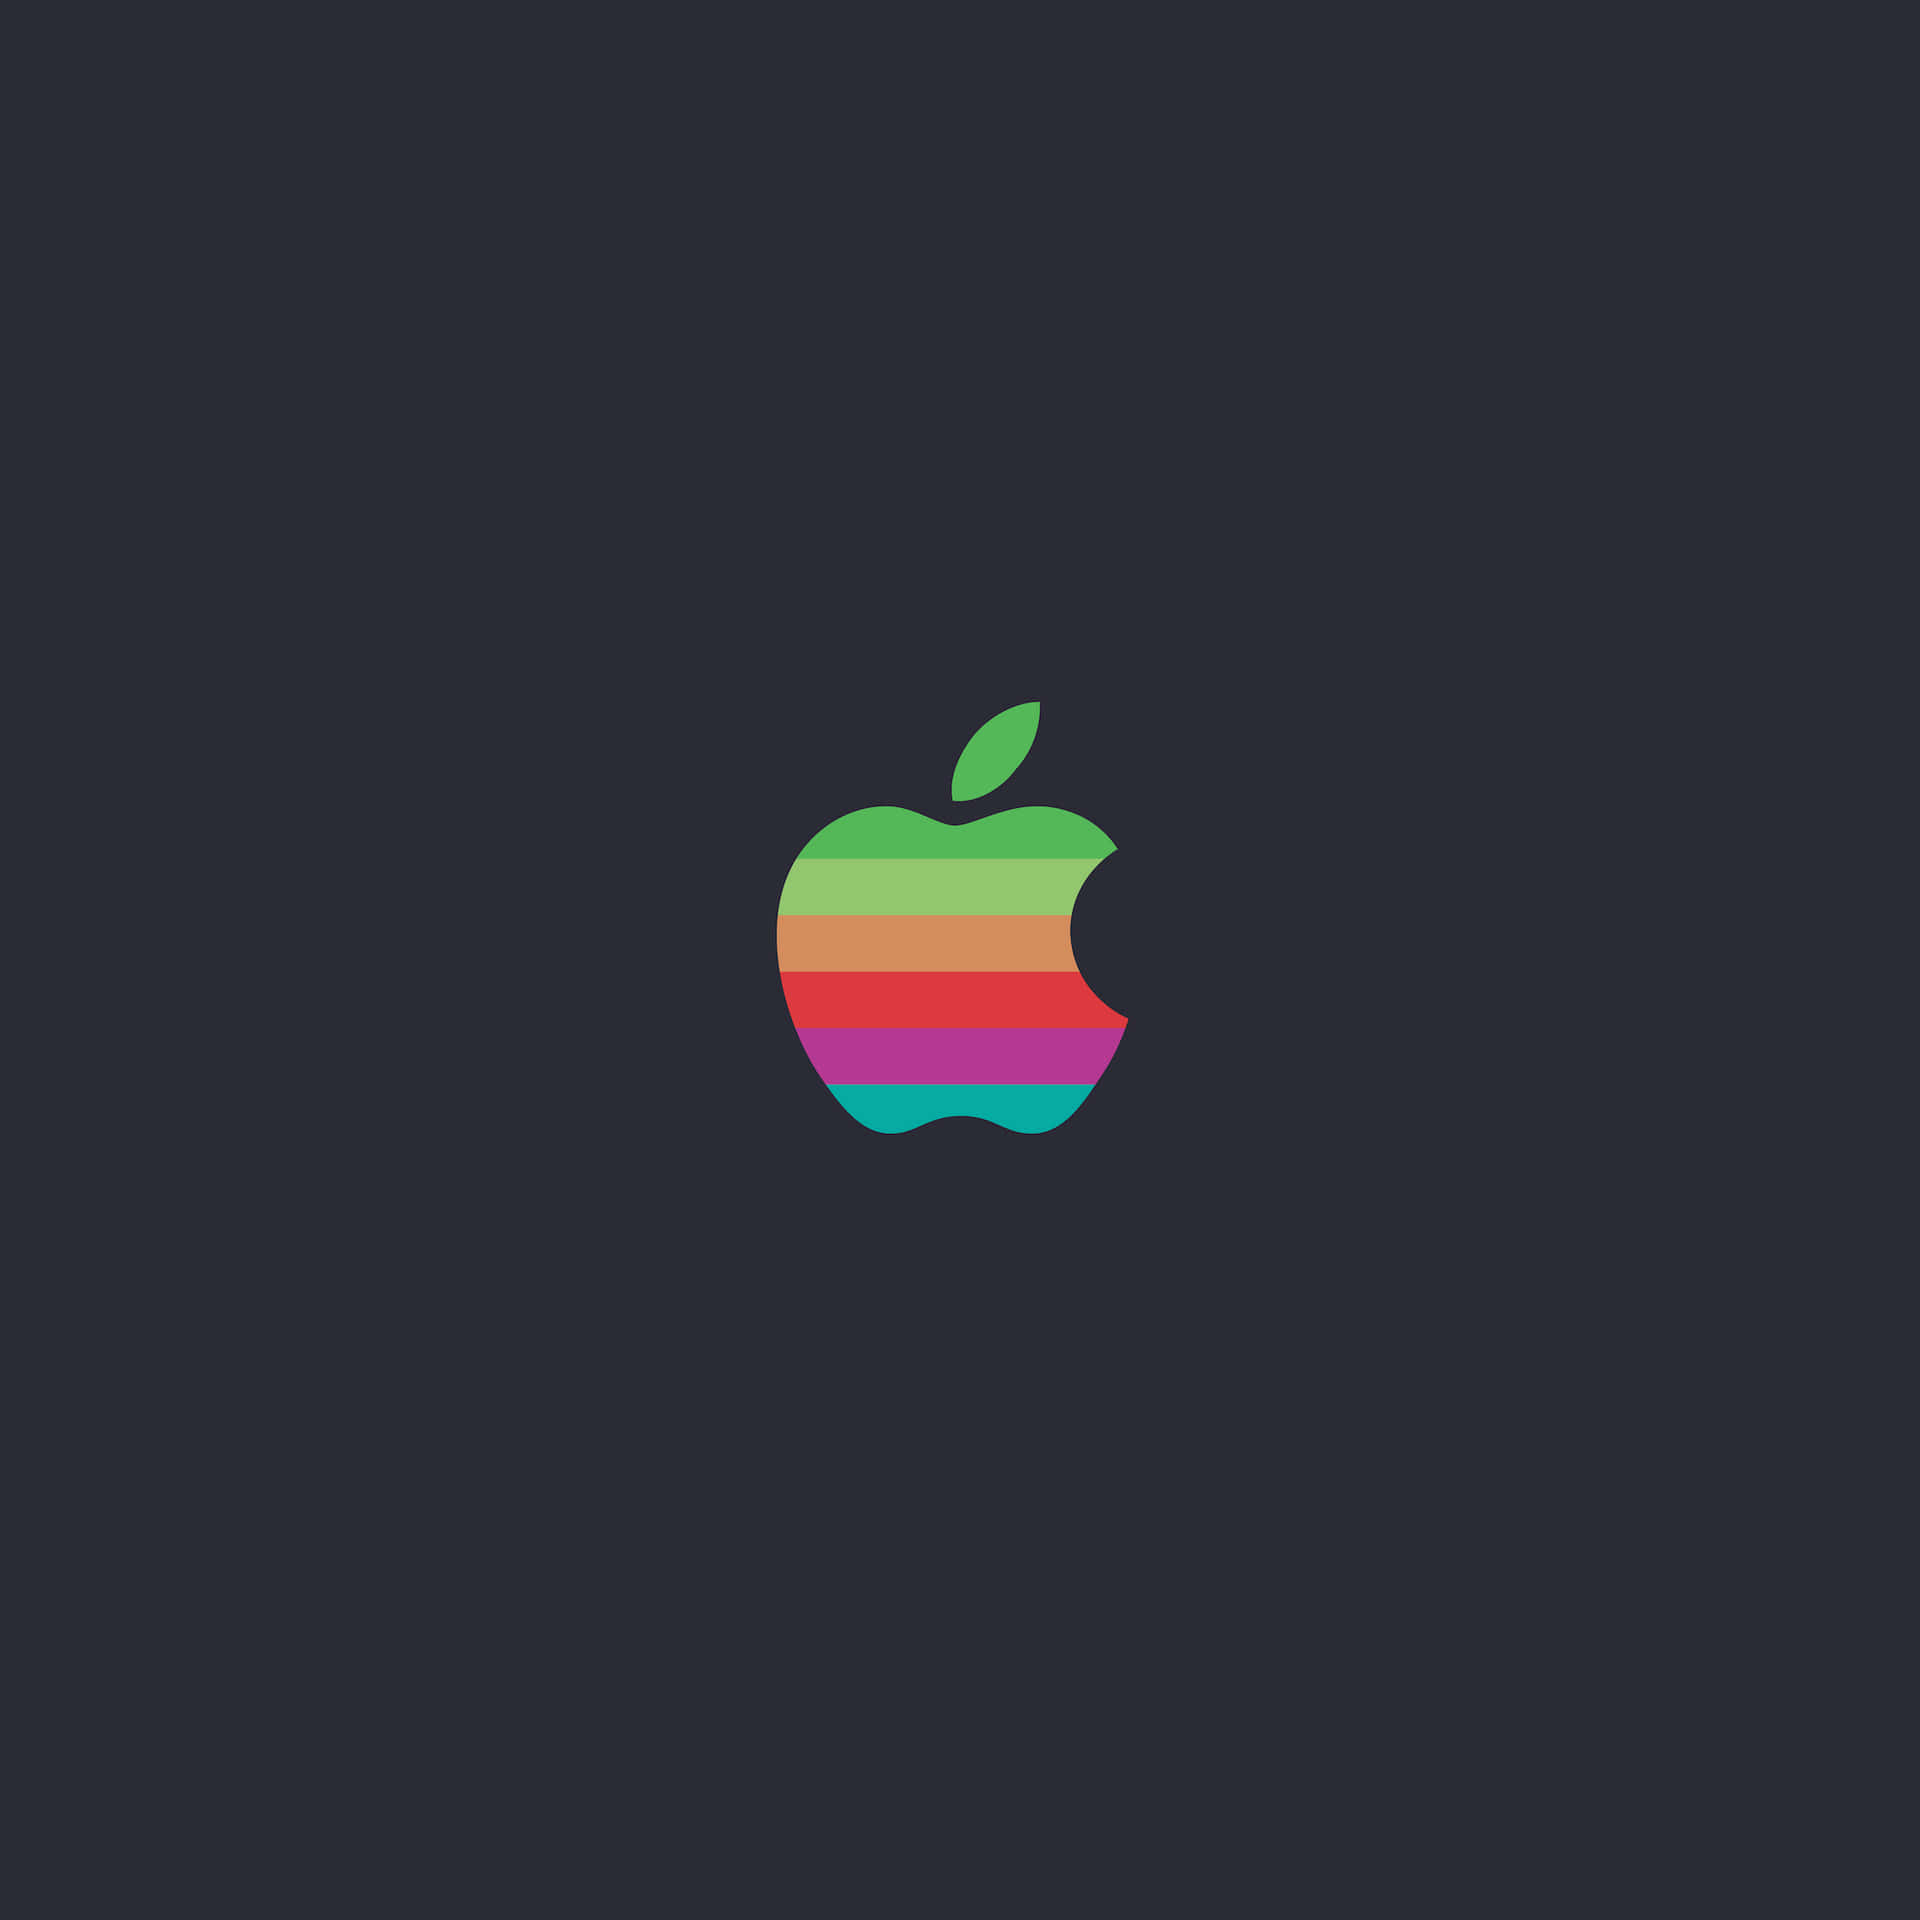 An abstract representation of the original Apple Inc logo Wallpaper